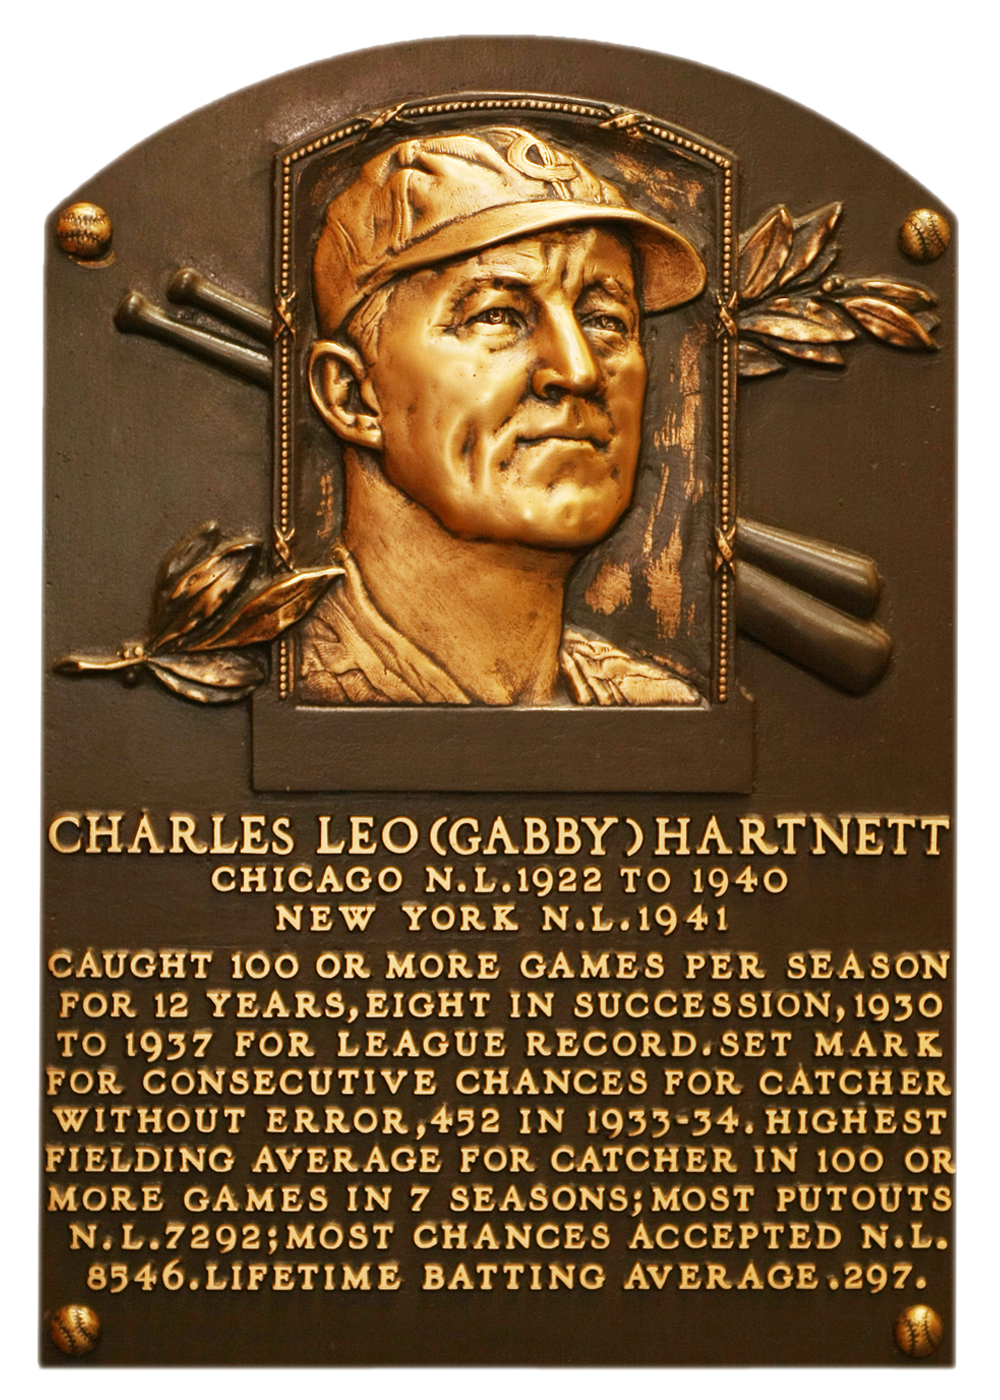 Gabby Hartnett Hall of Fame plaque